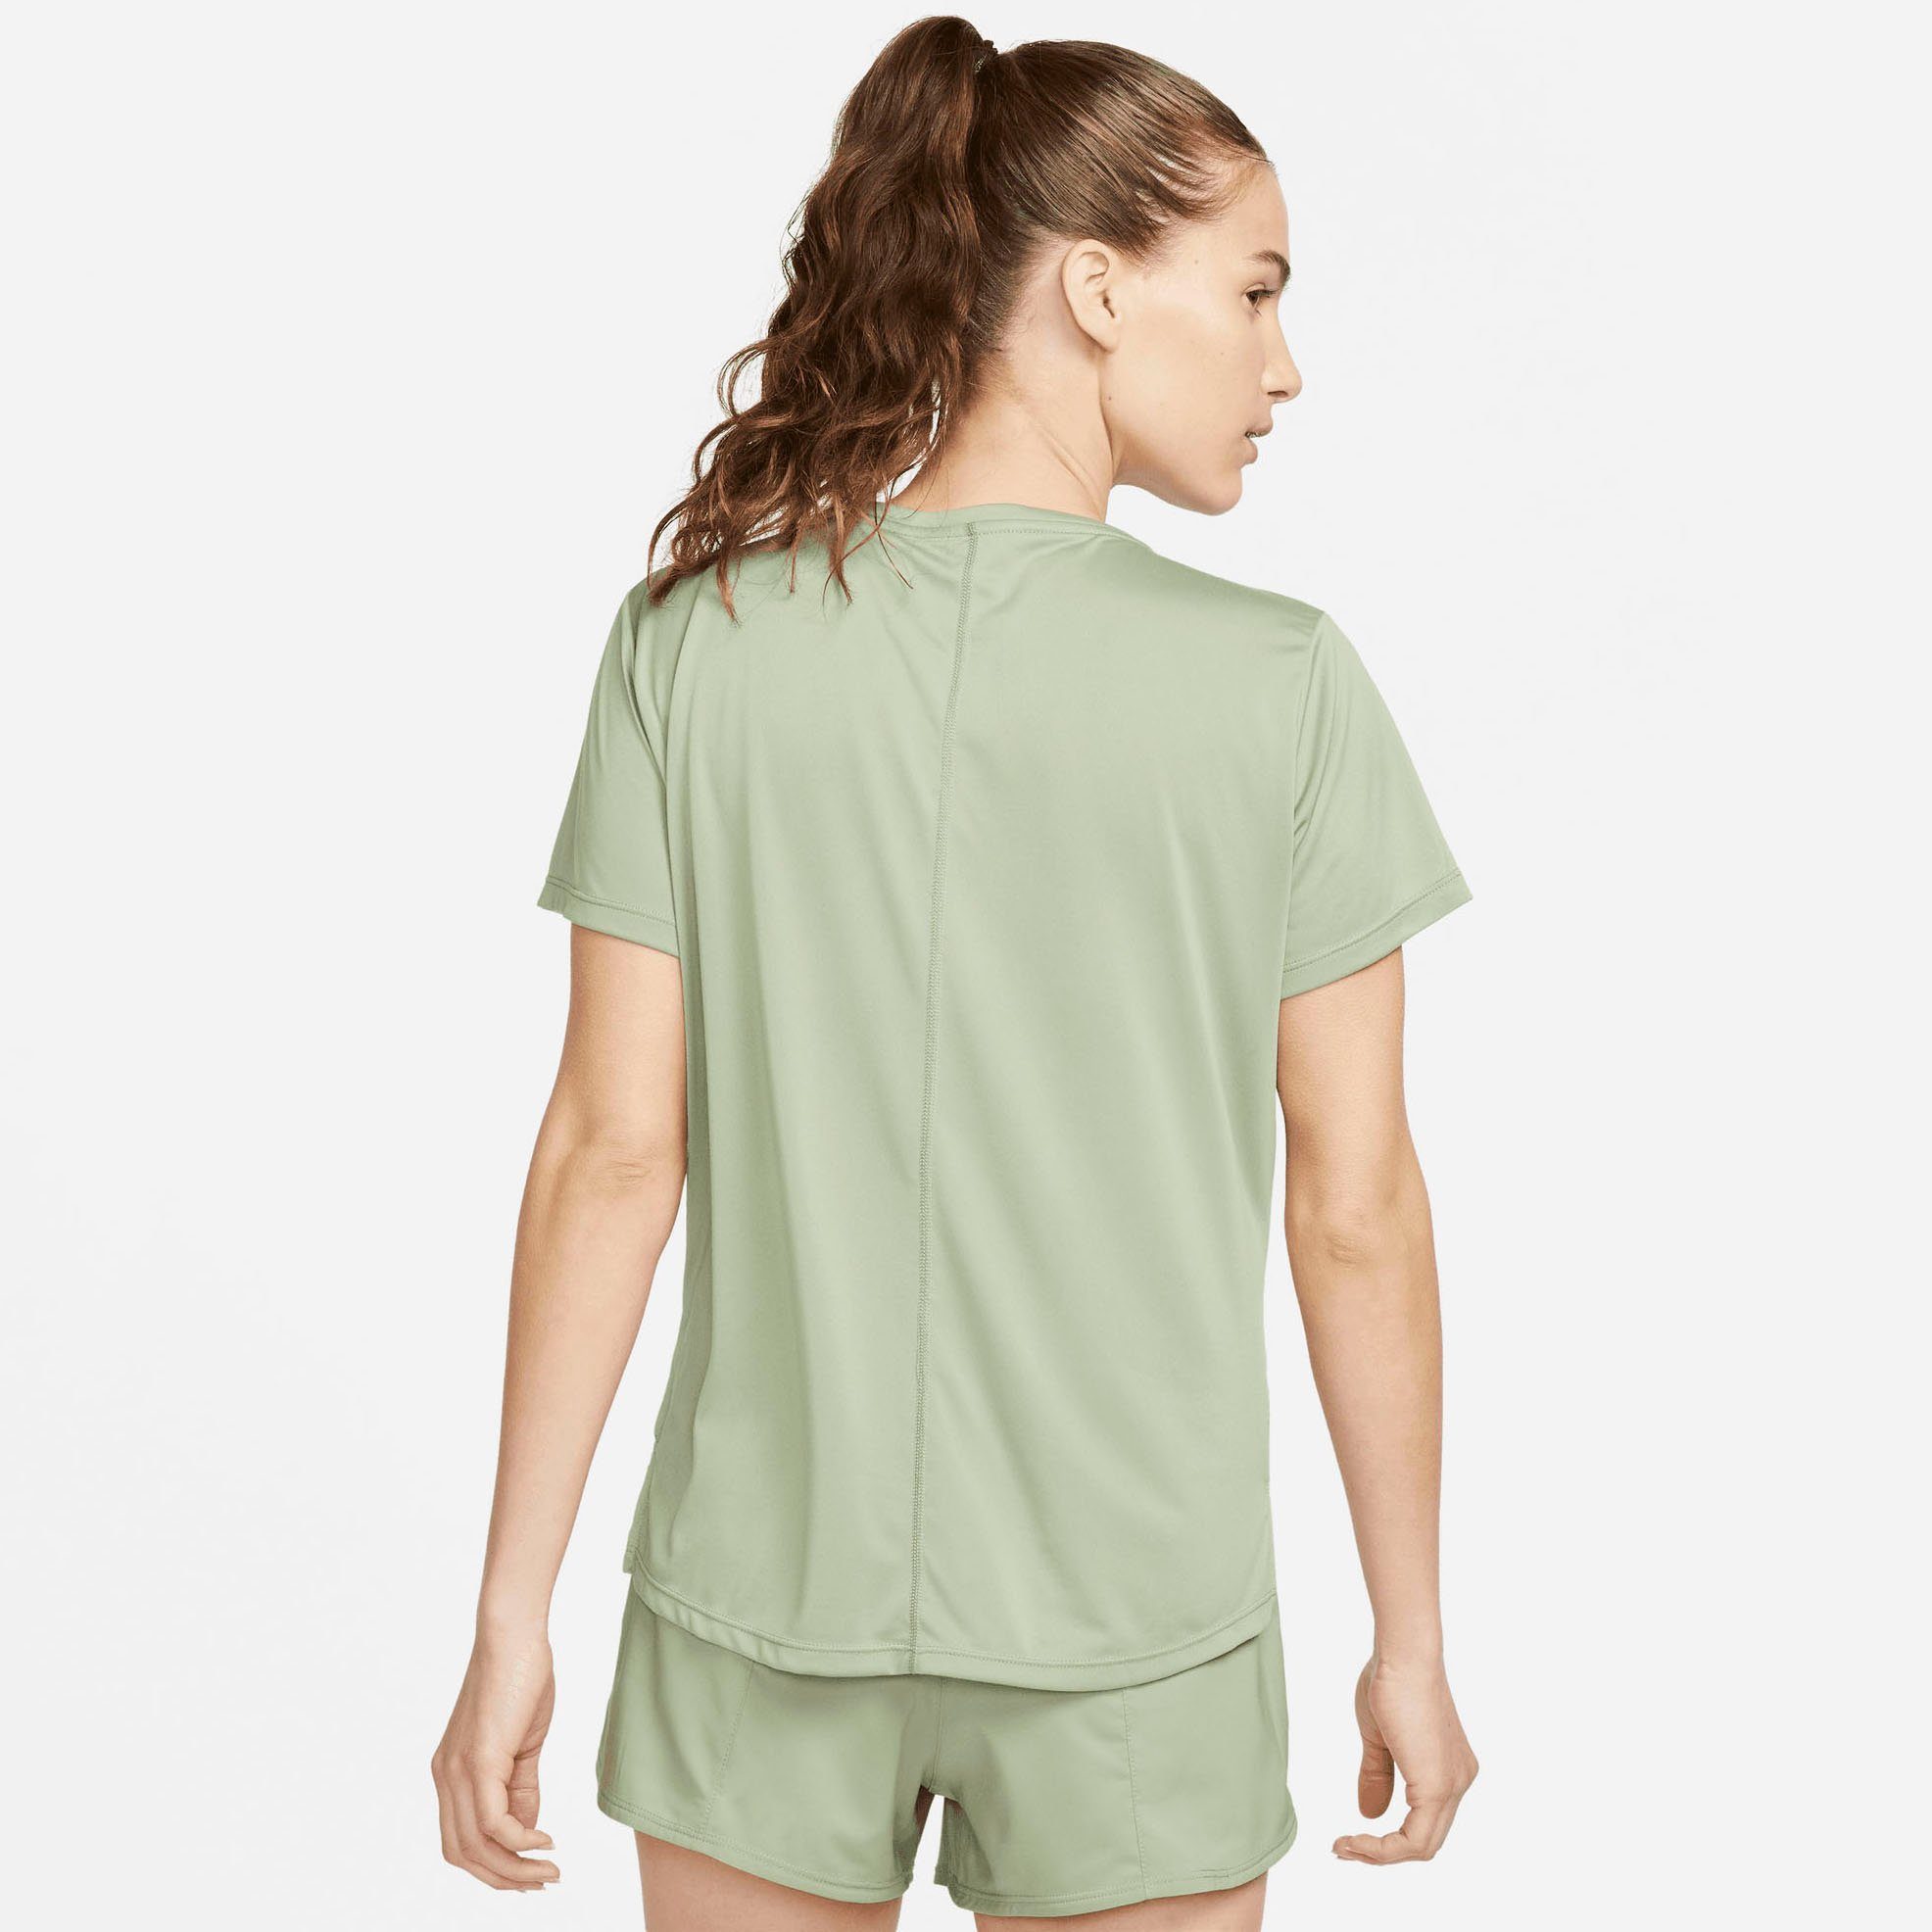 Women's One grün Laufshirt Short-Sleeved Swoosh Dri-FIT Top Nike